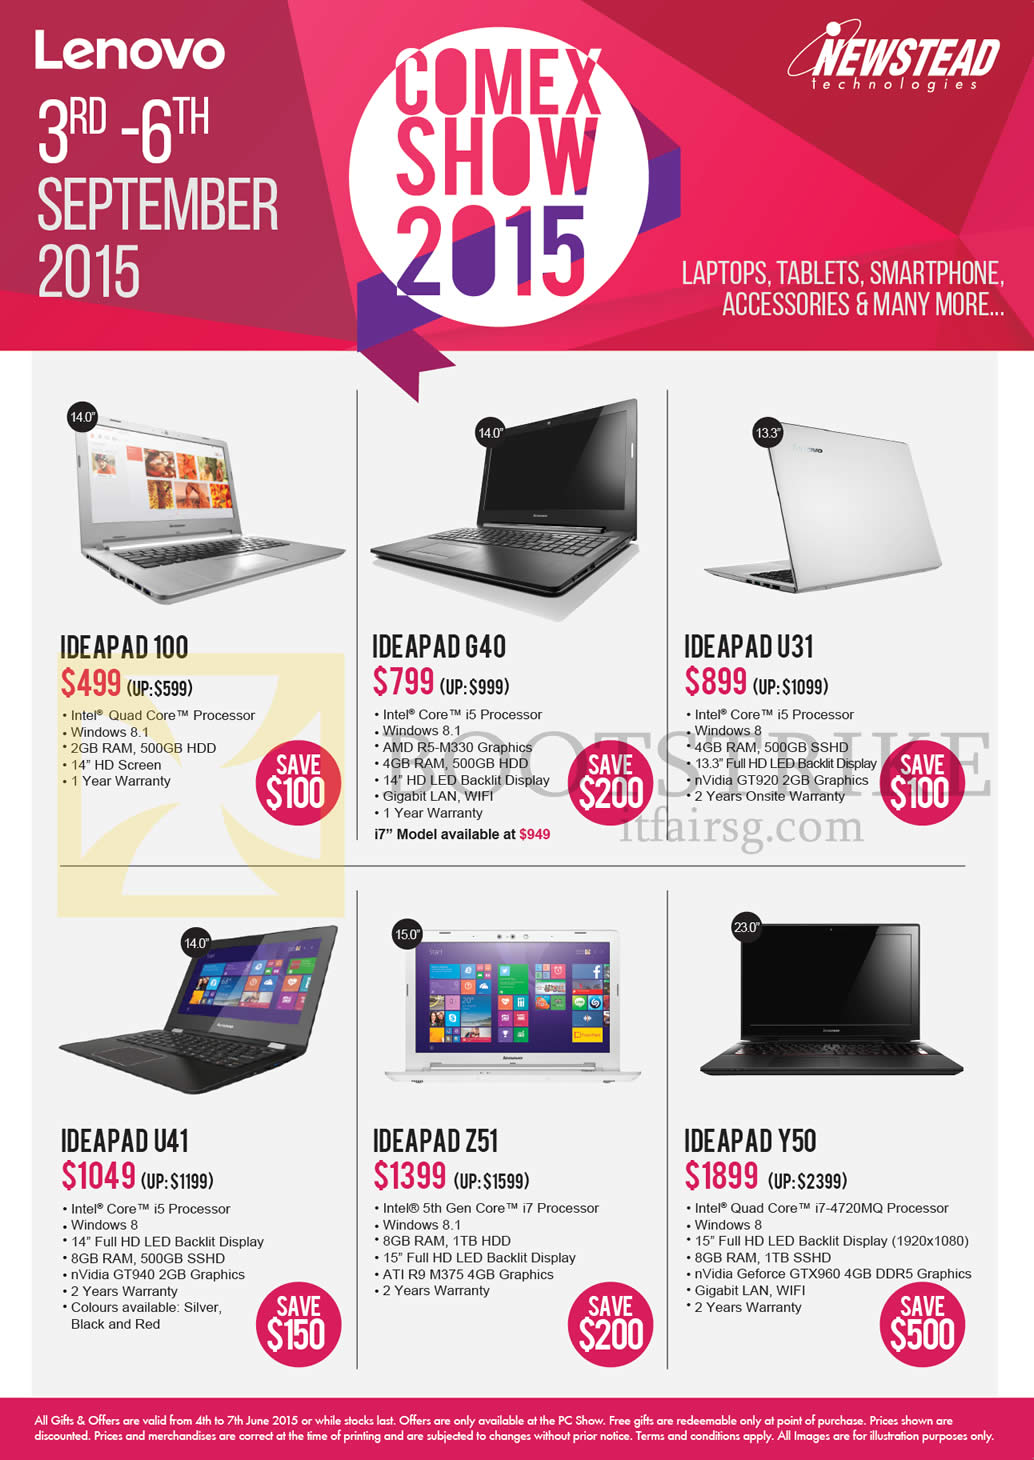 COMEX 2015 price list image brochure of Lenovo Newstead Notebooks Ideapad 100, G40, U31, U41, Z51, Y50